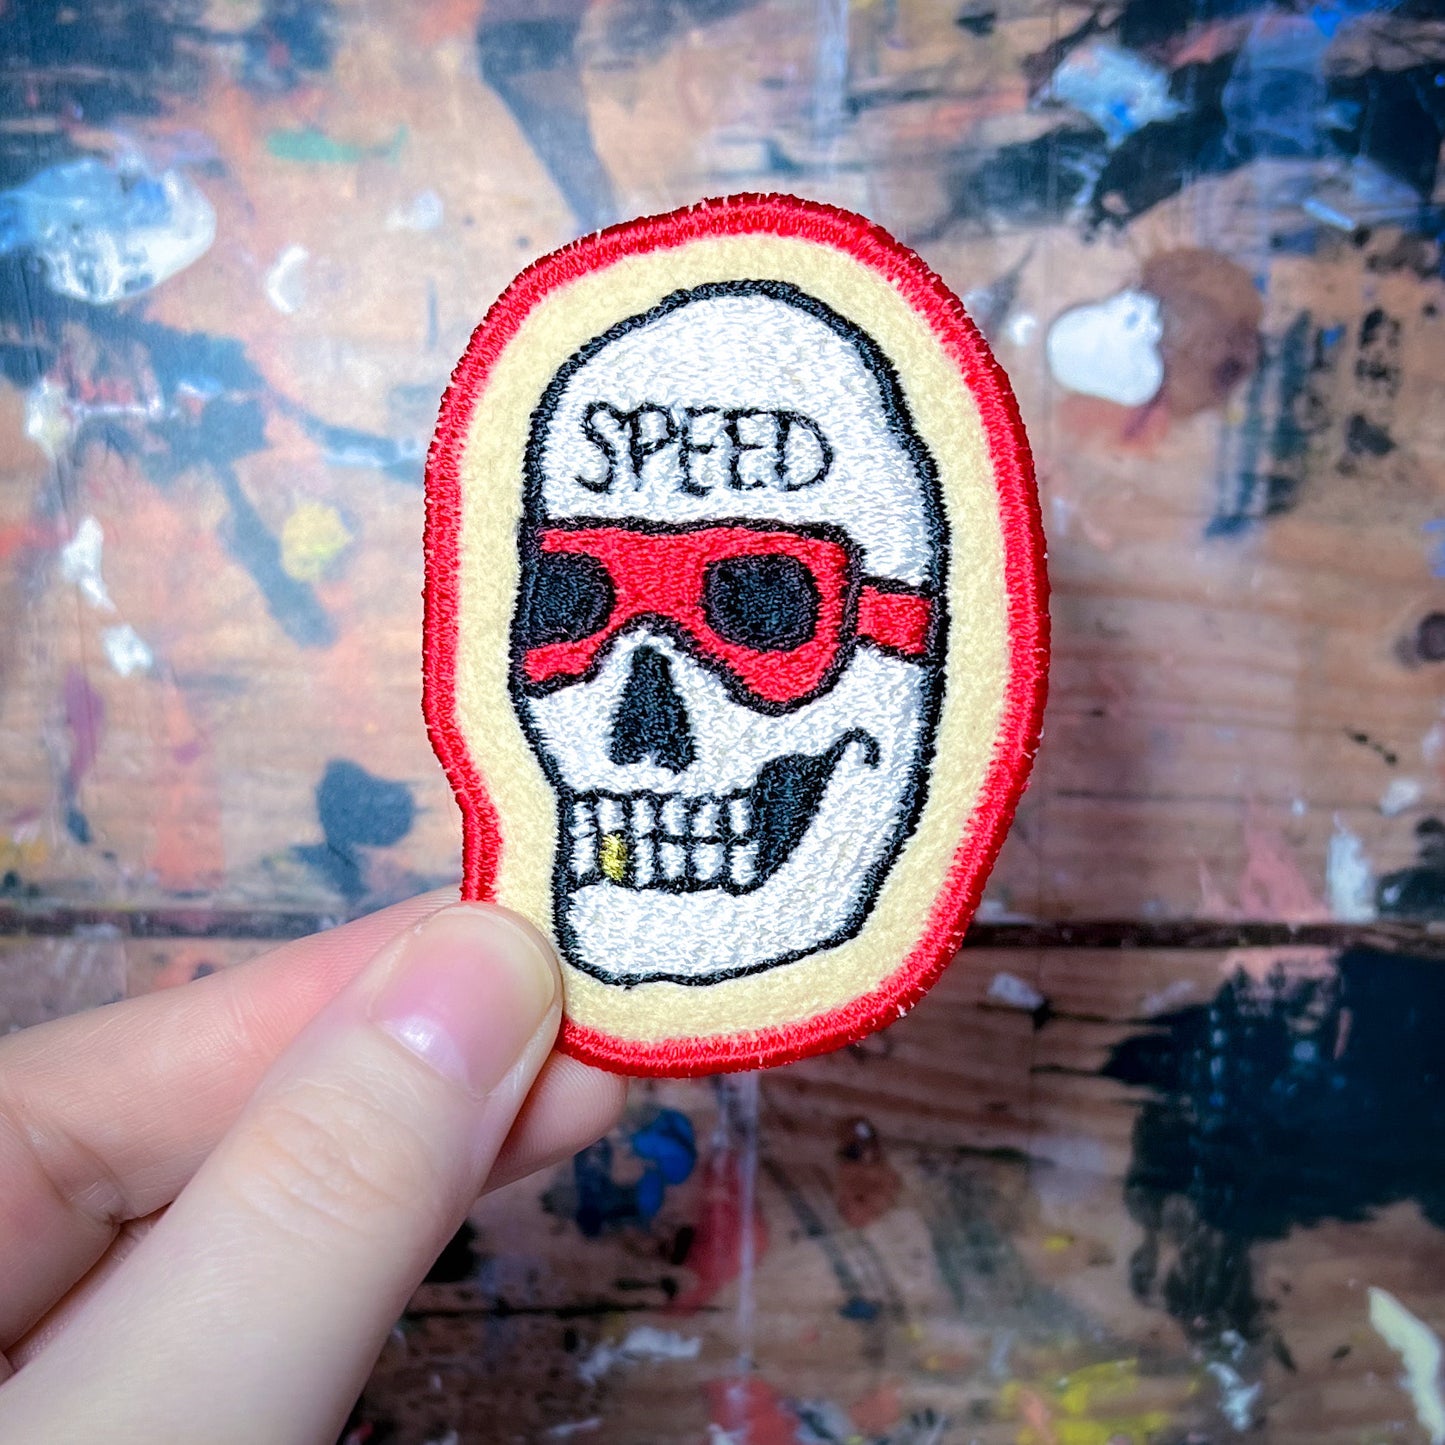 Speed Skull Handmade Patch